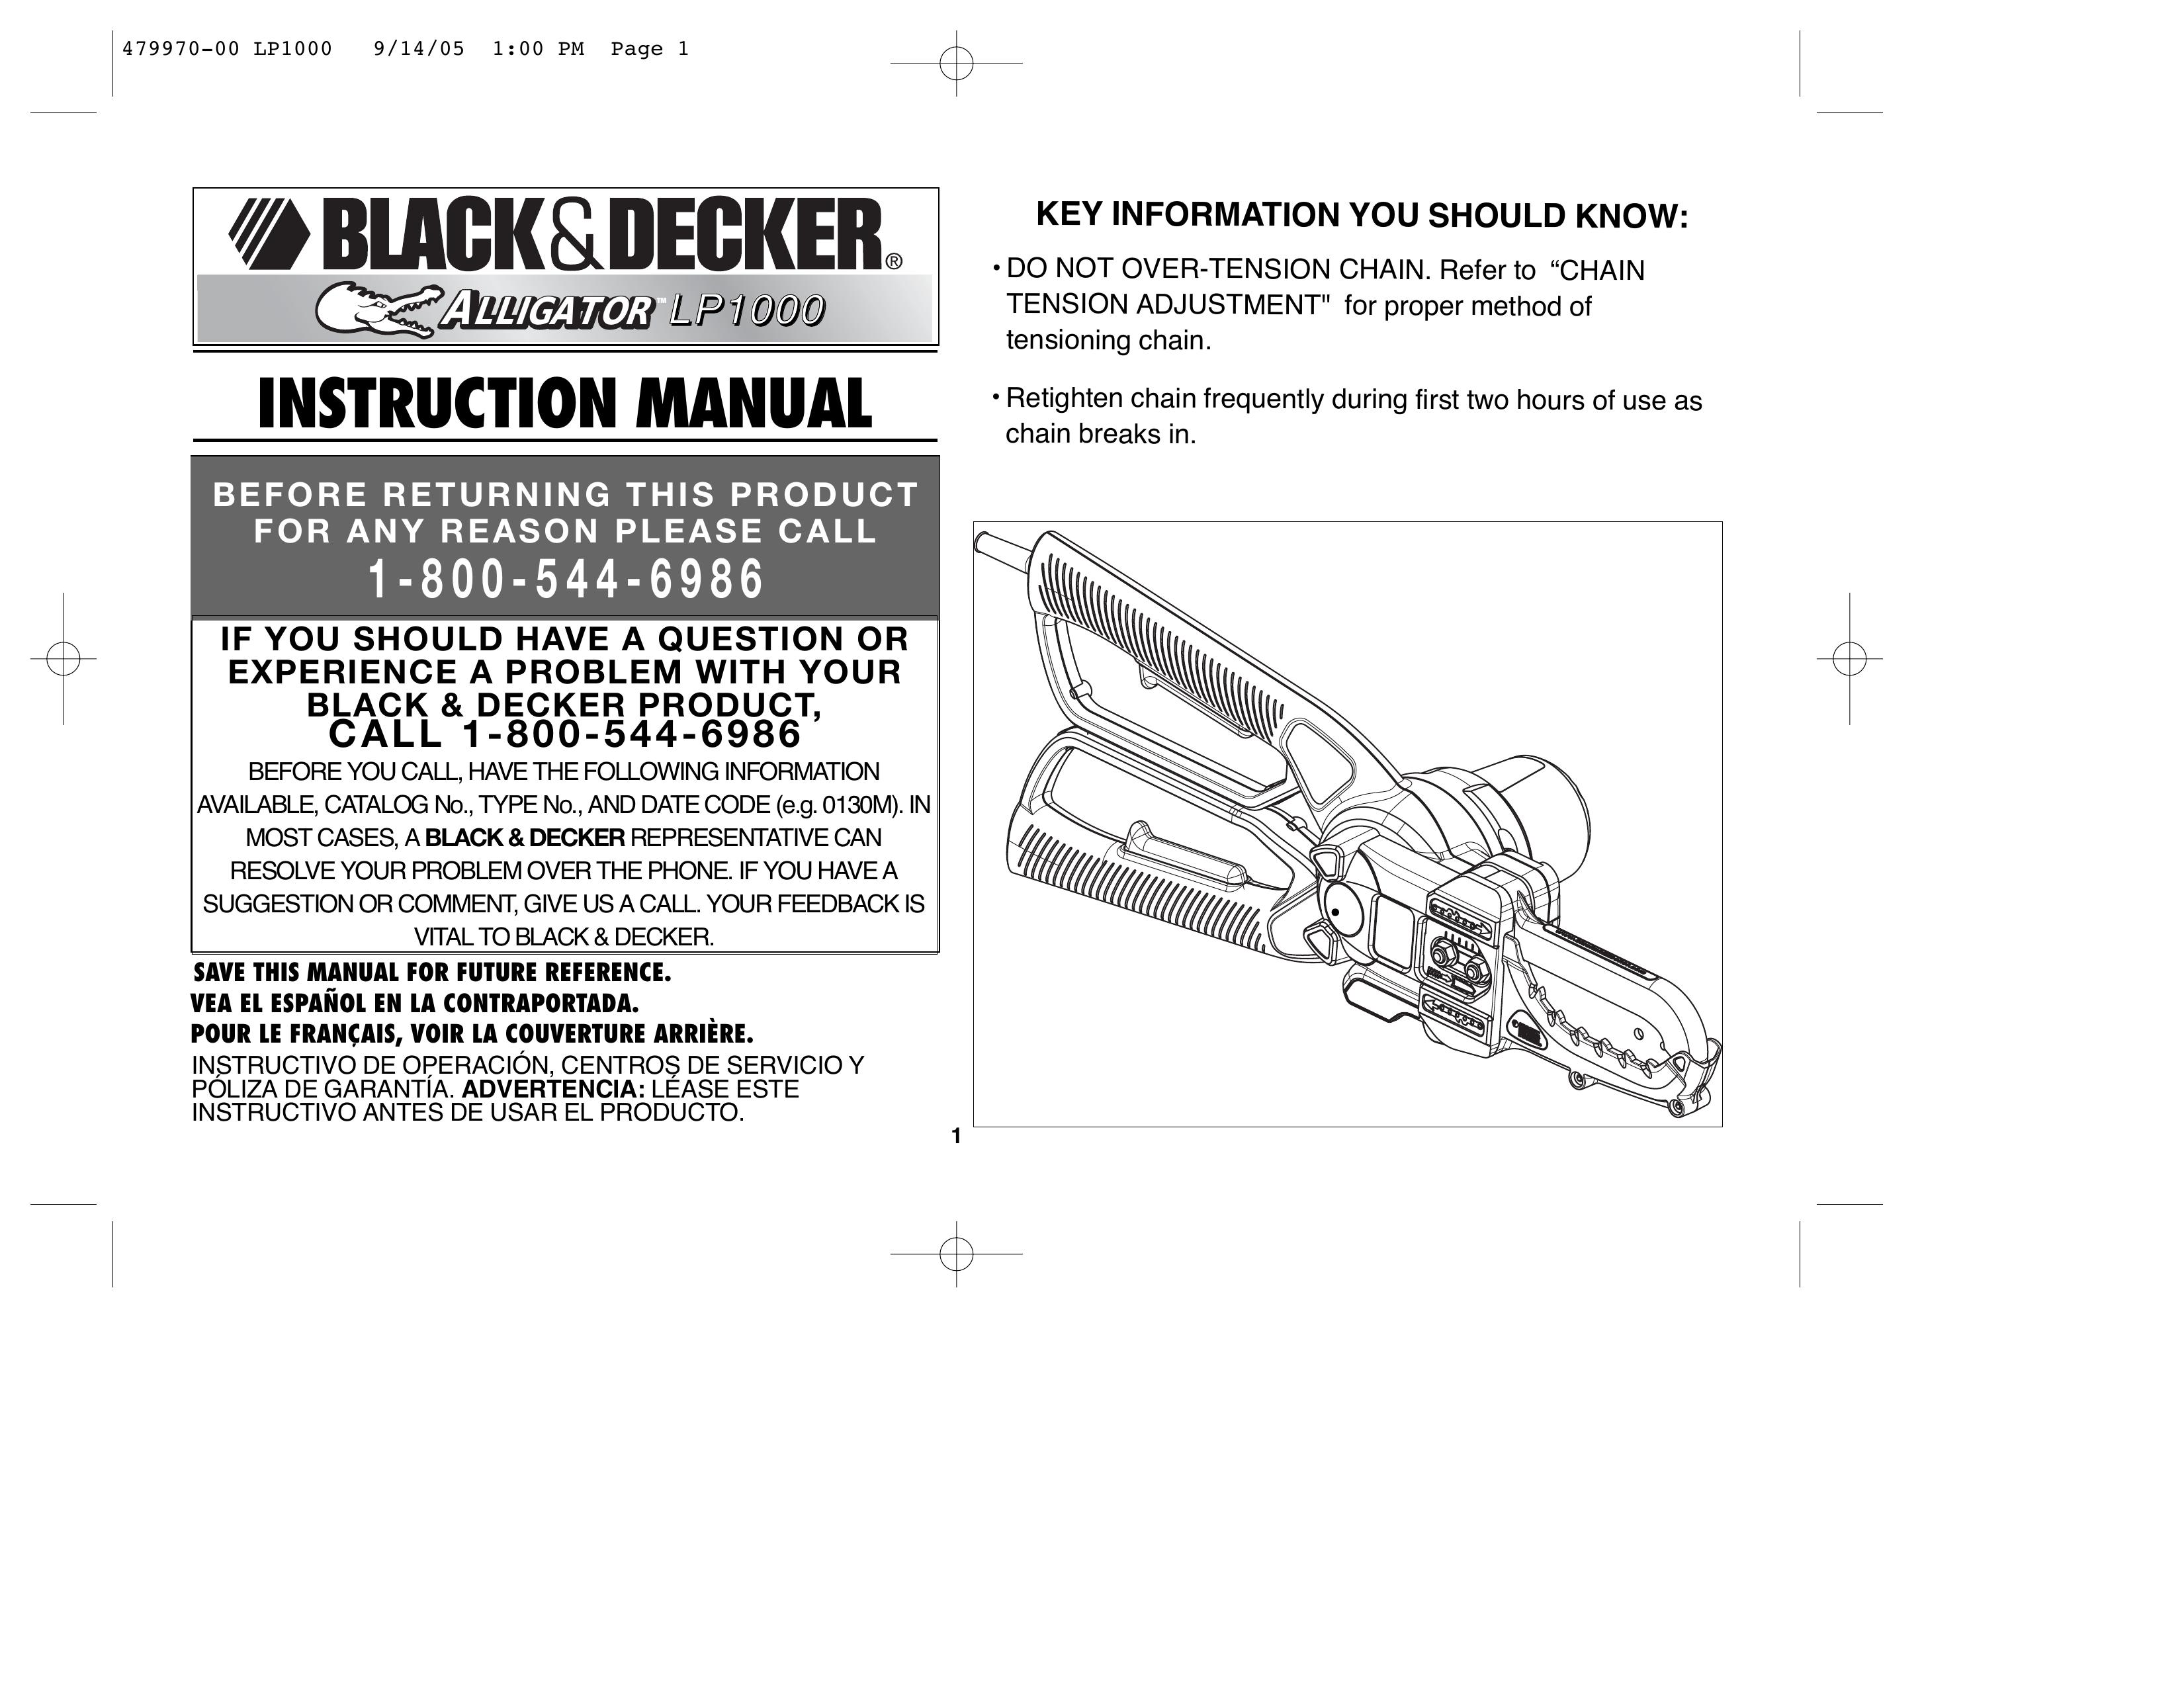 Black & Decker 479970-00 Lopper User Manual